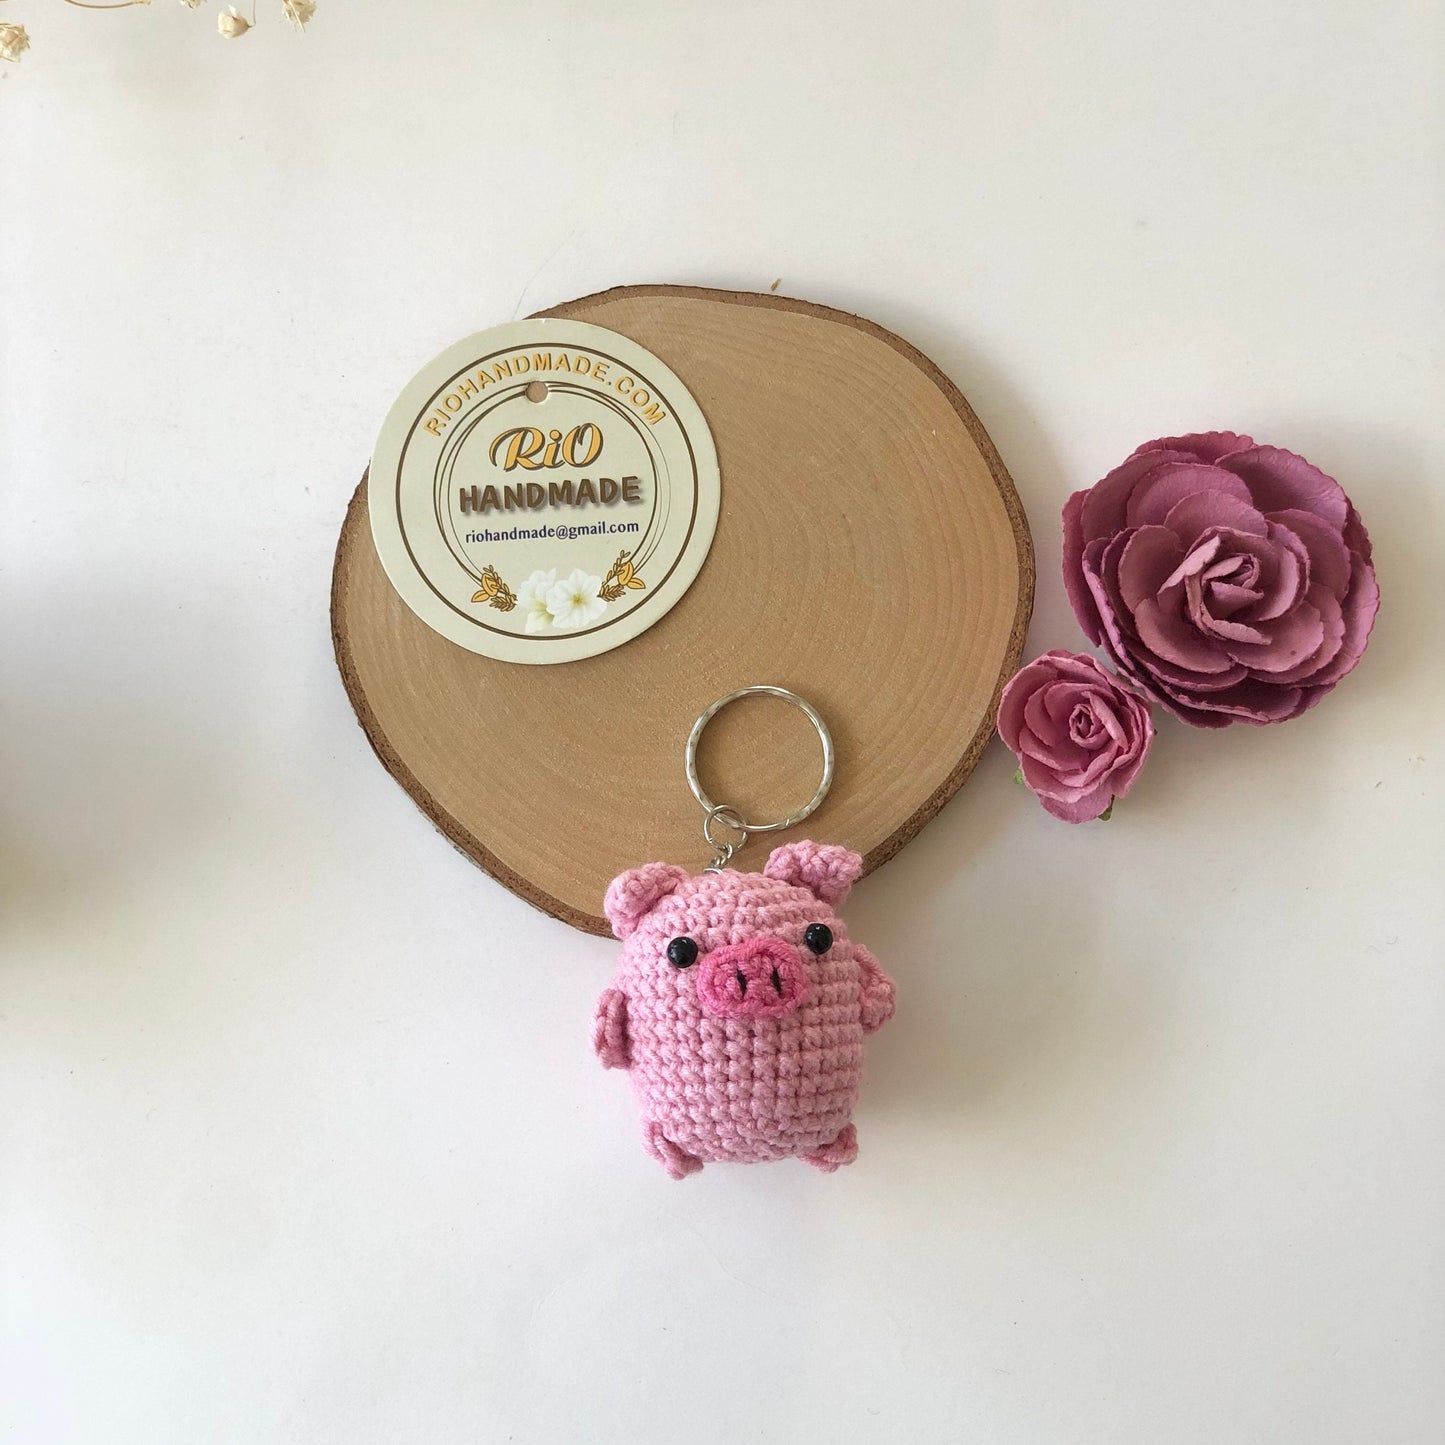 Handmade pink pig crochet keychain mirror charm crochet amigurumi, plushie toy, gift, car hanging accessory